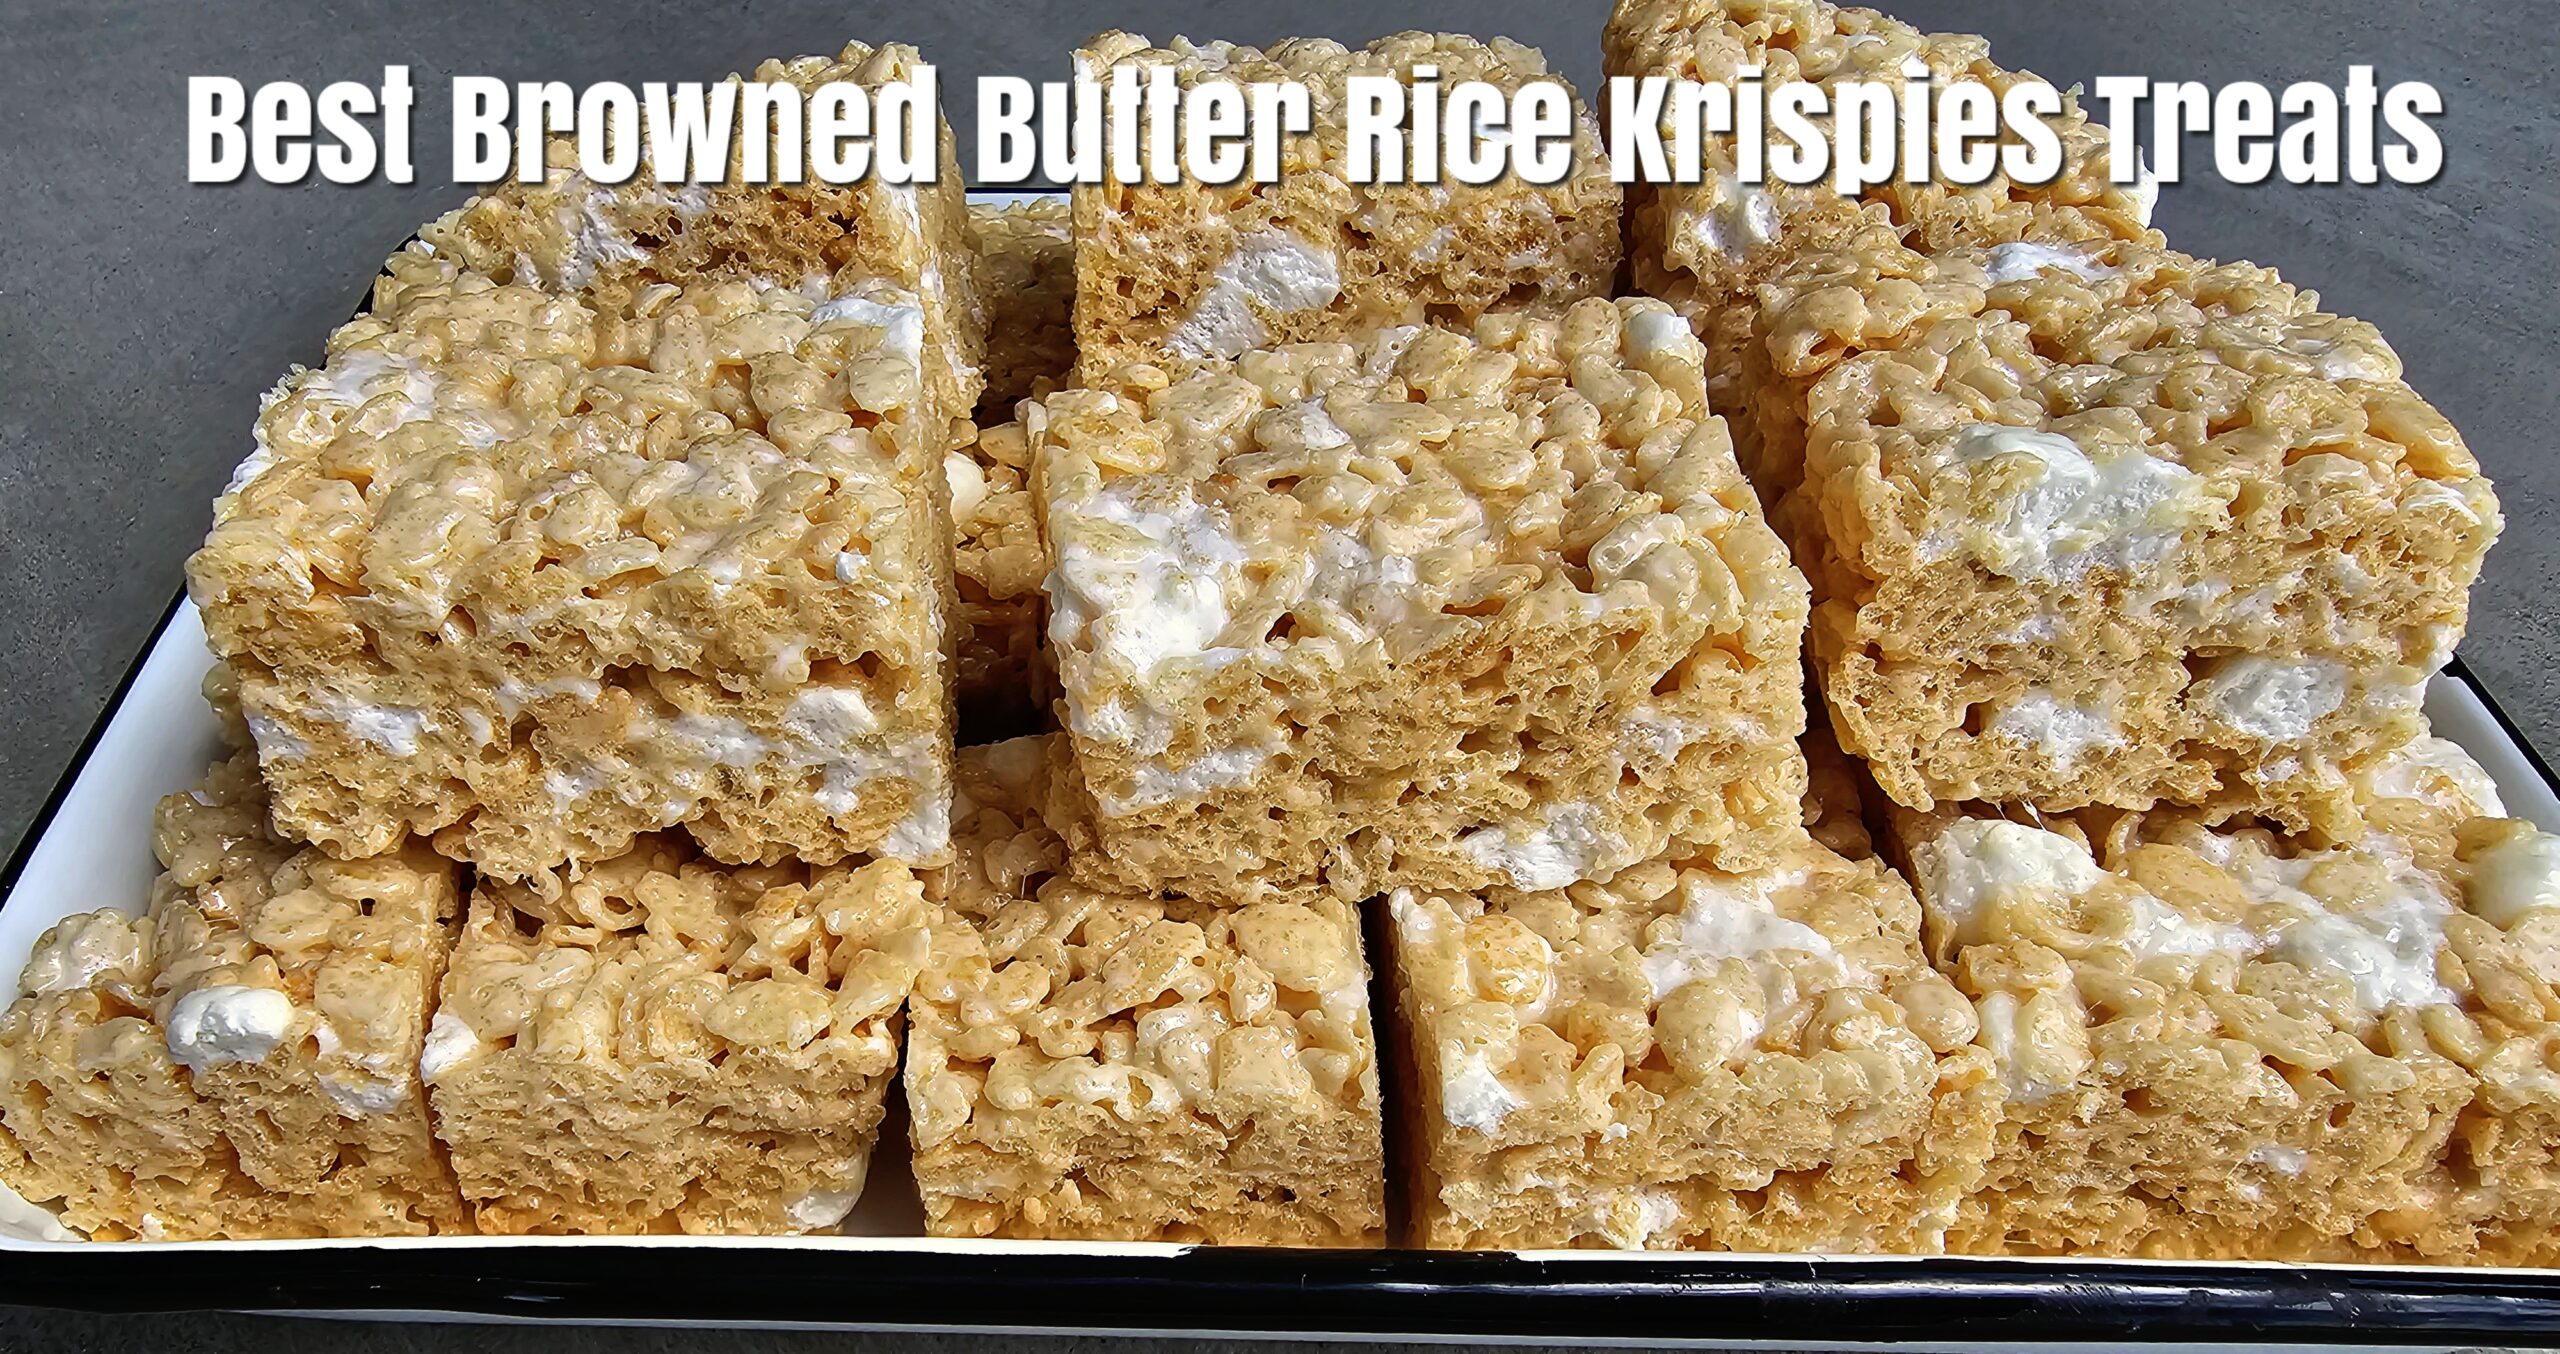 Best Browned Butter Rice Krispies Treats #snacks #ricekrispietreats #easyrecipe #dessert